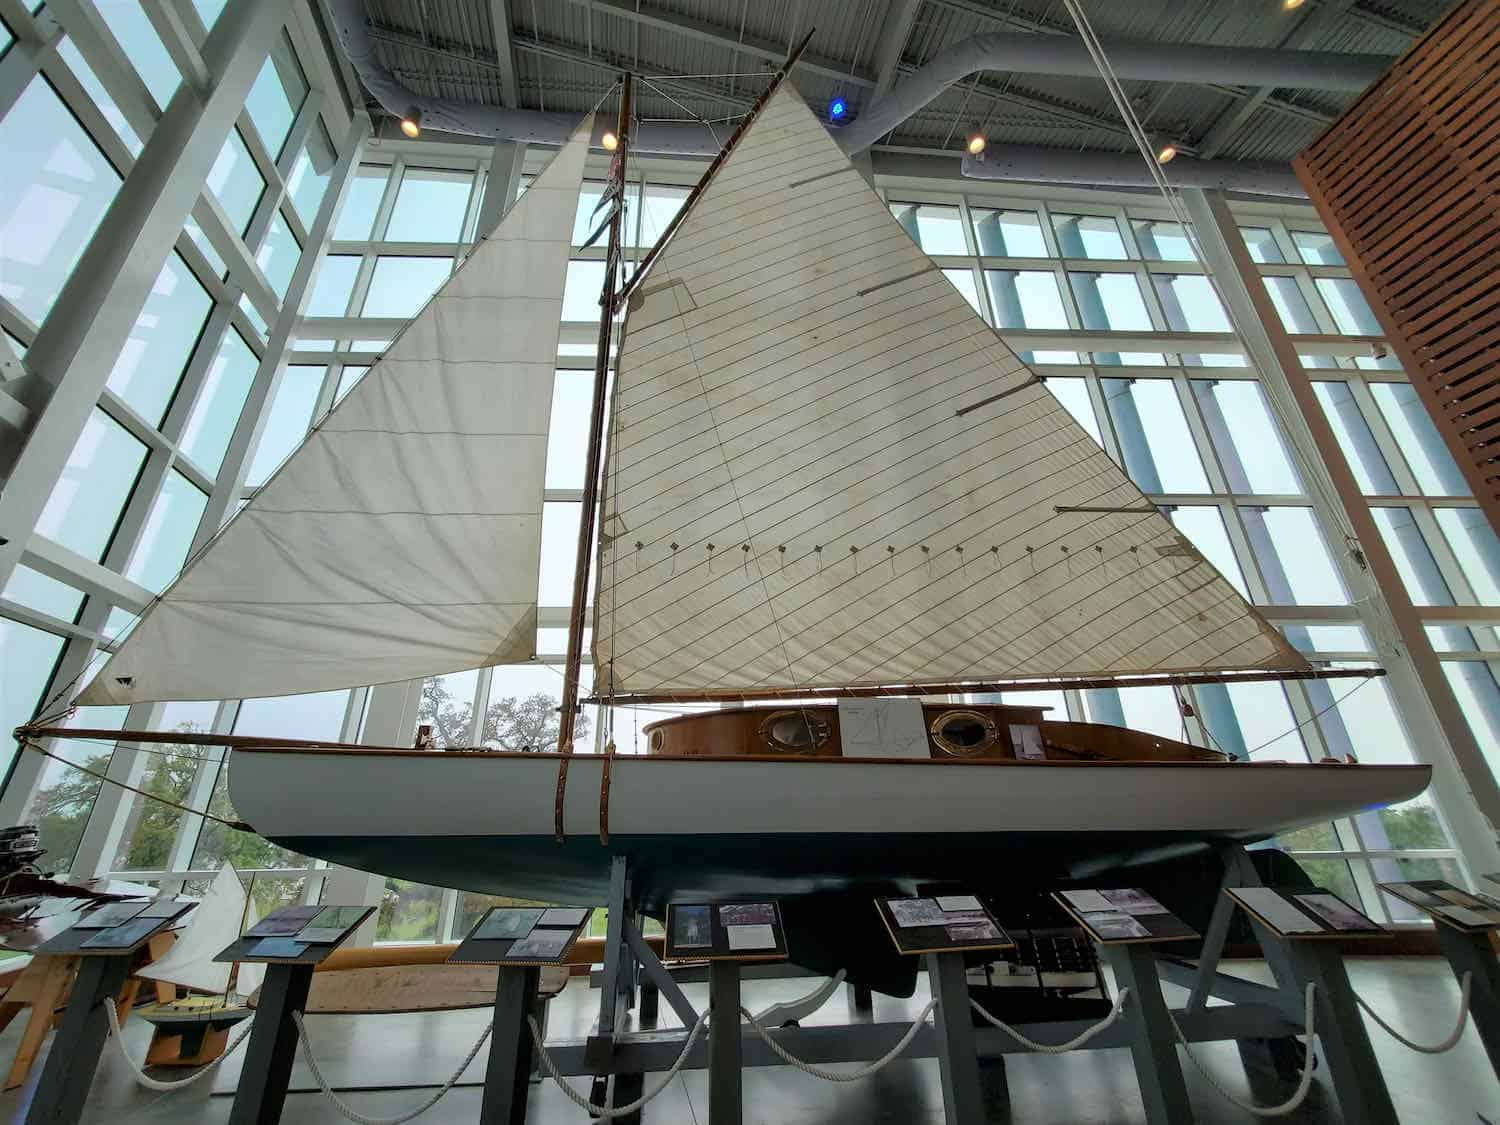 Sailboat model inside a museum